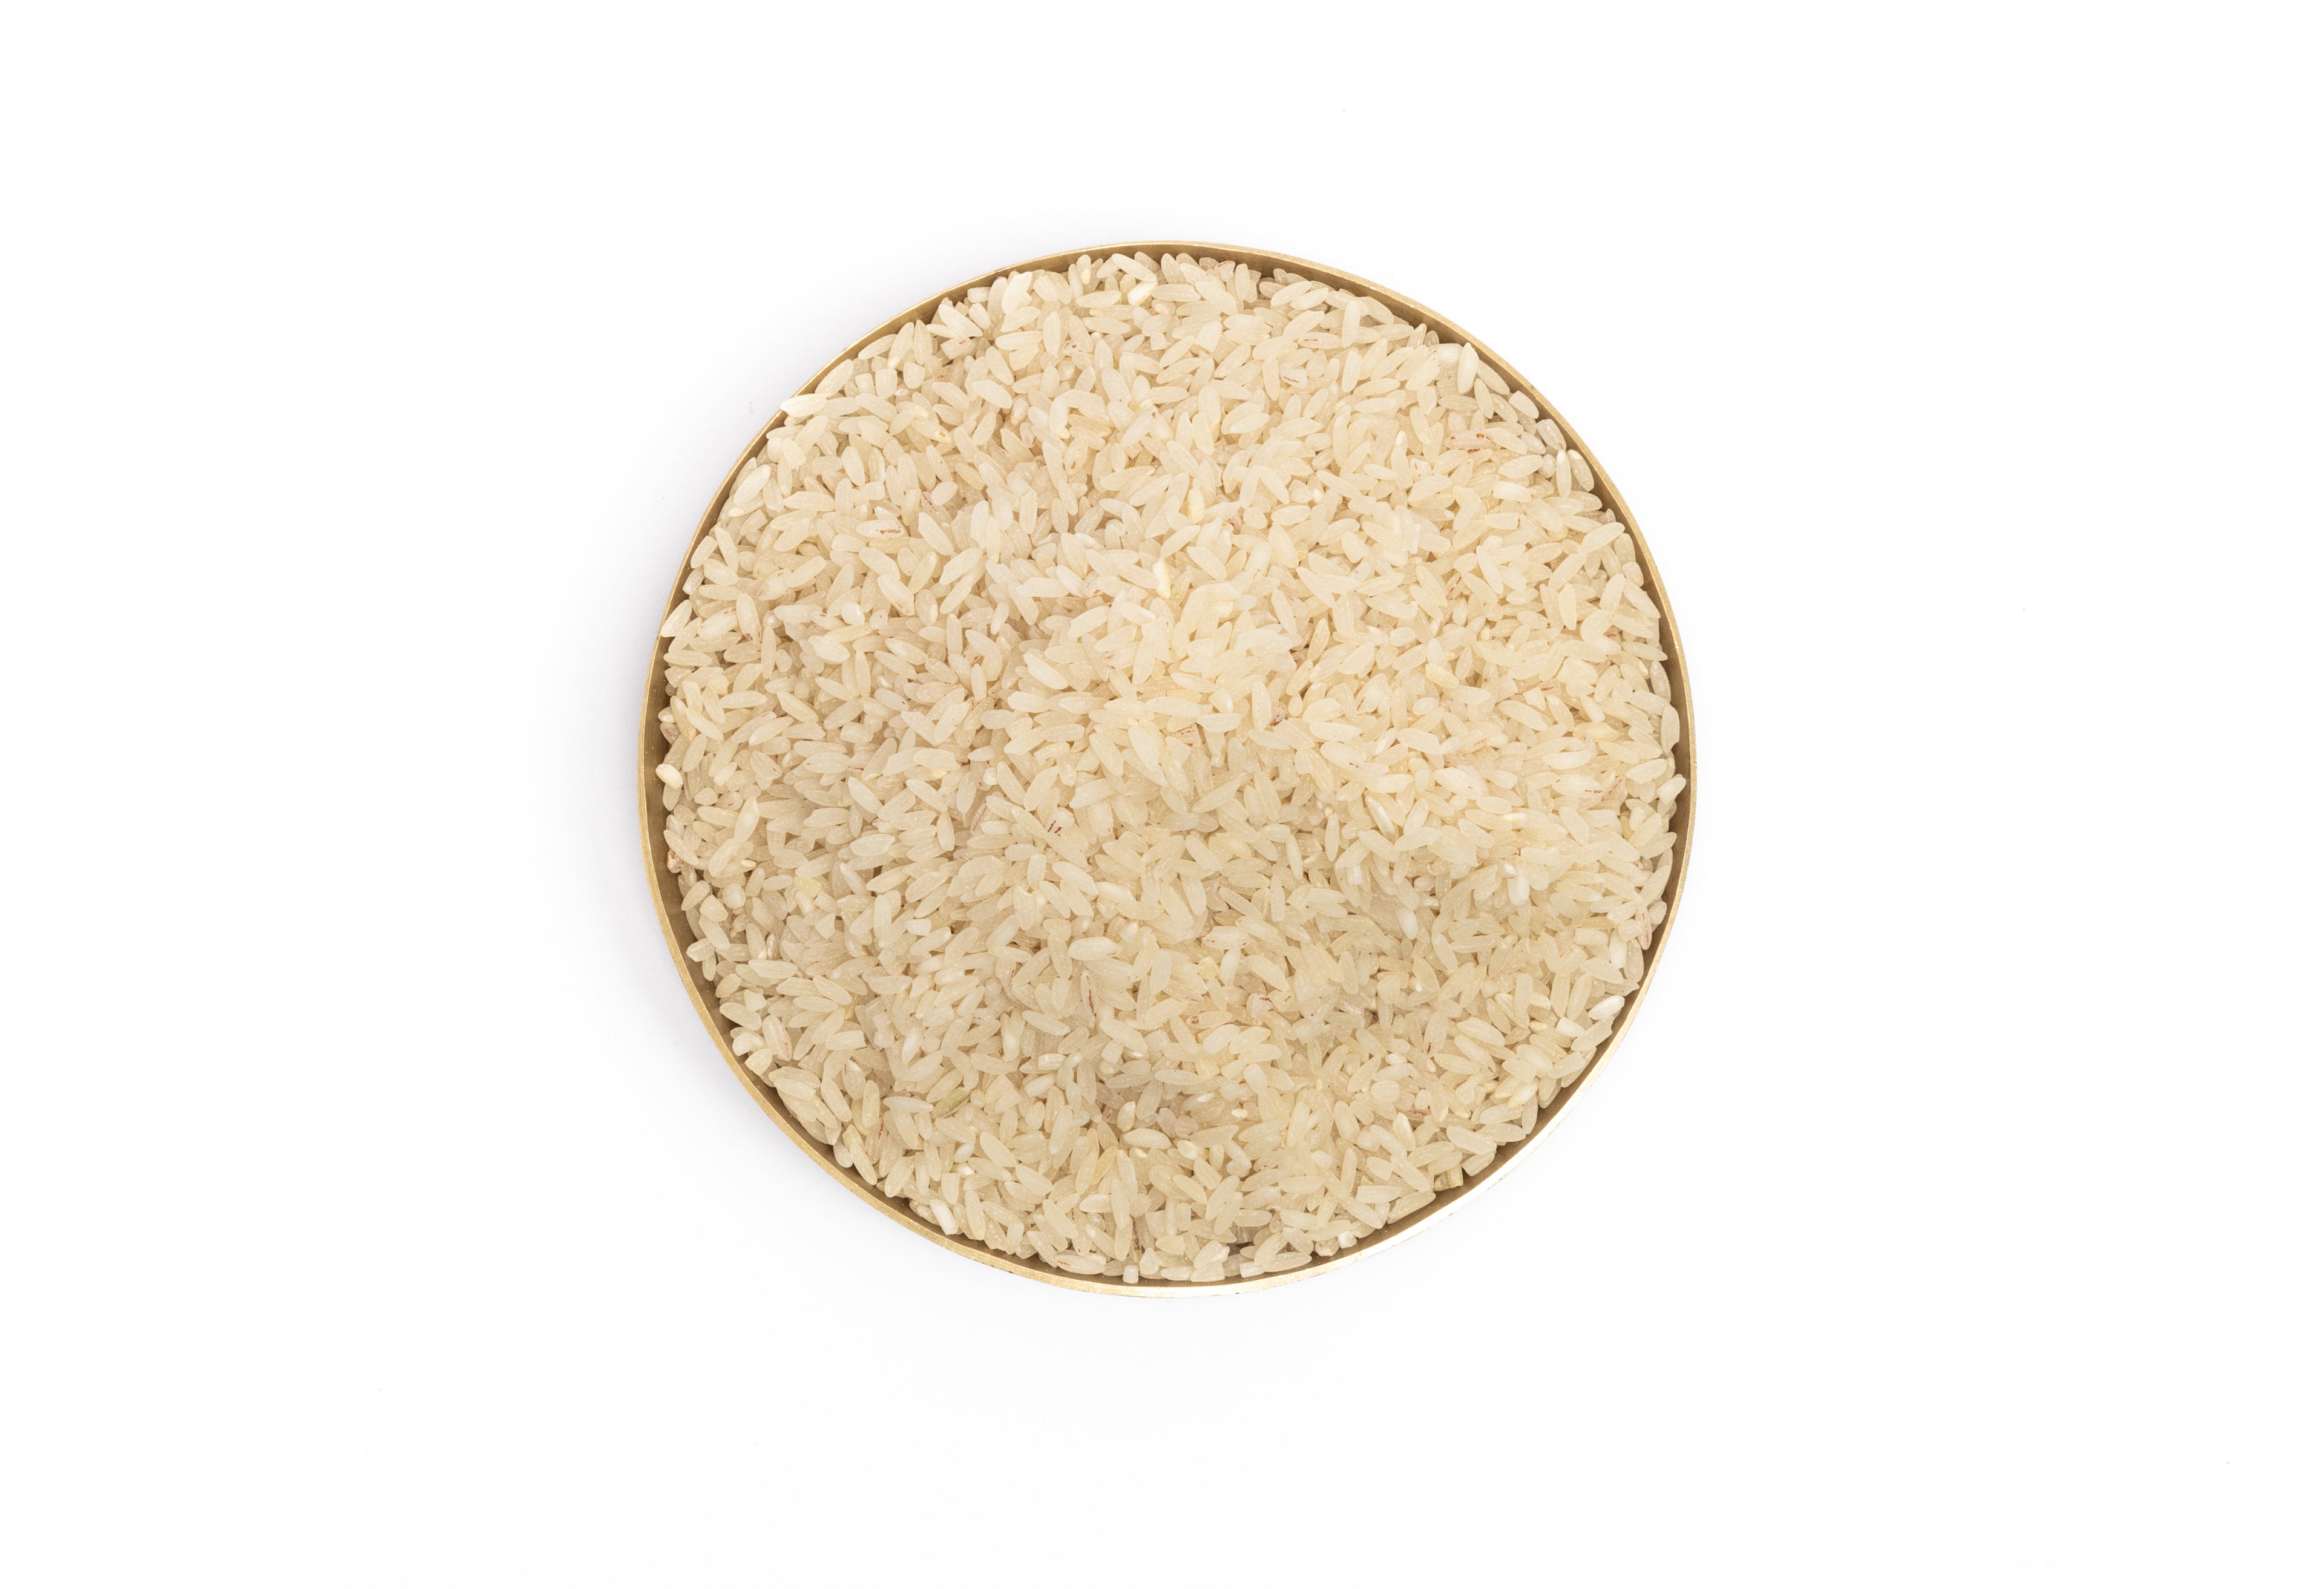 Rajghudiya Rice (Semi Polished) / राजघुड्या